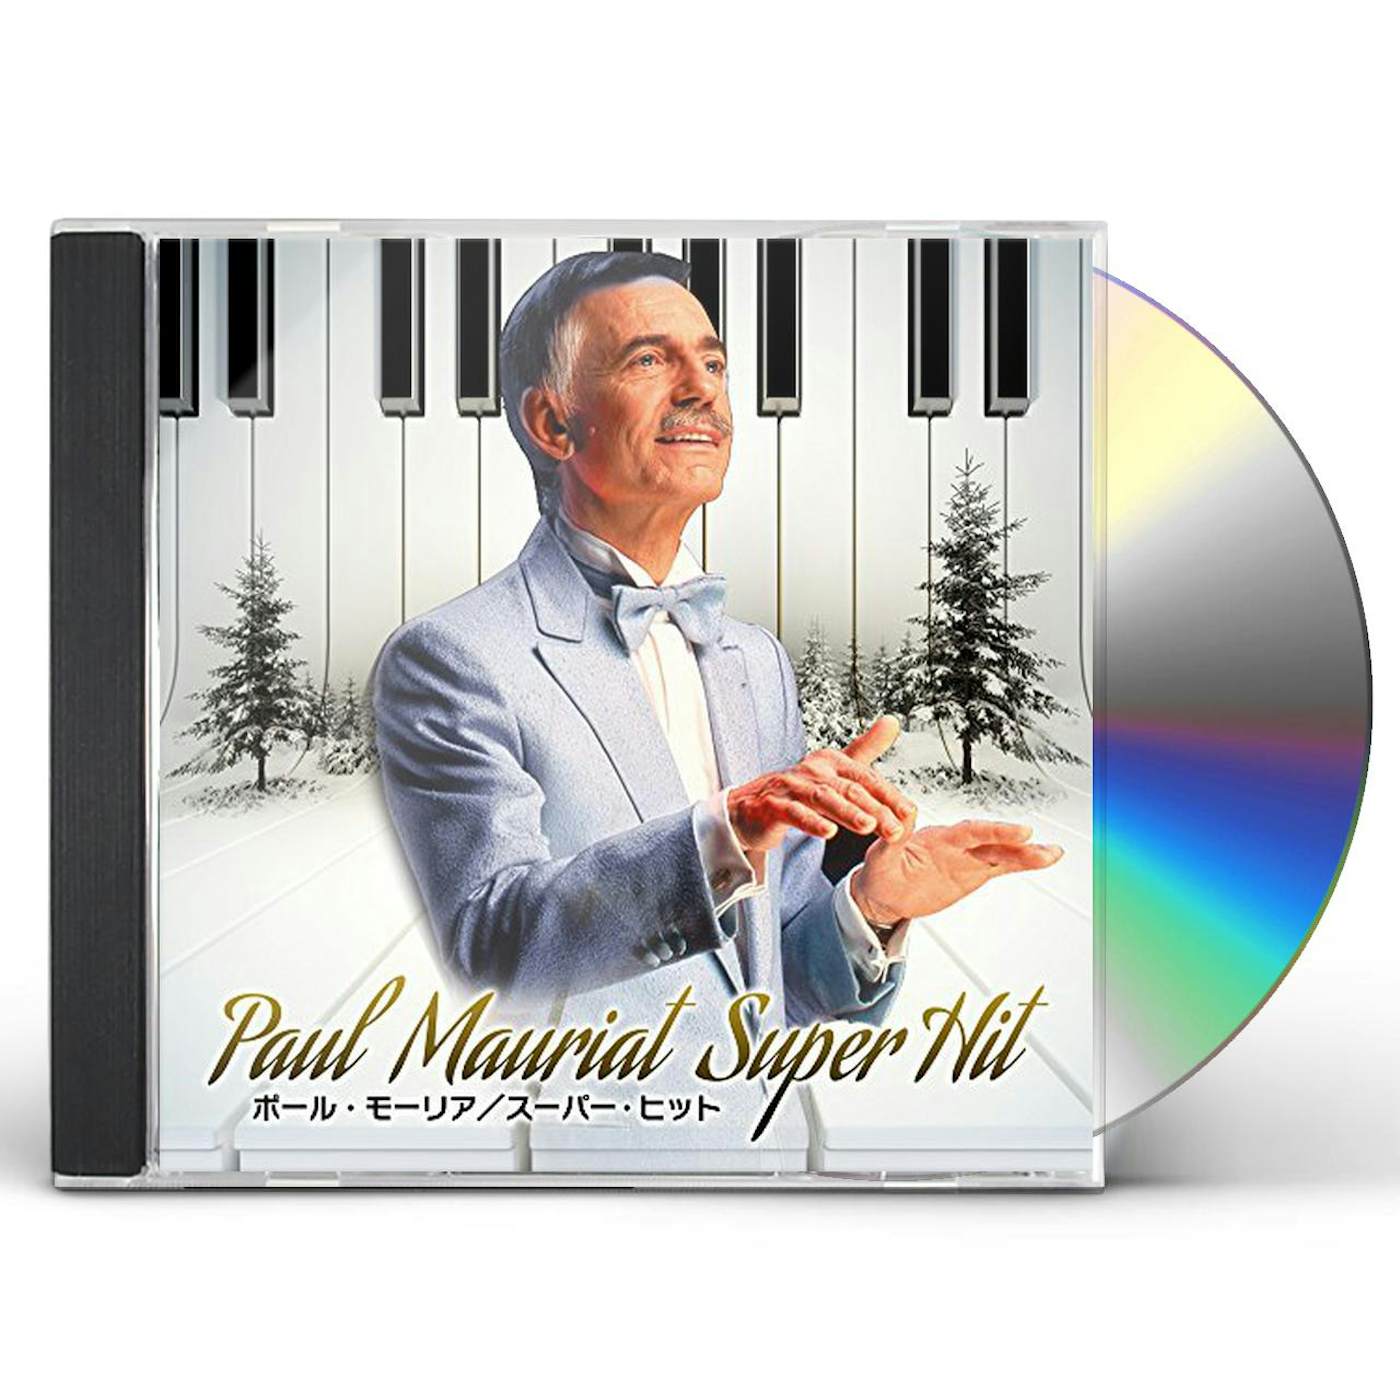 Paul Mauriat SUPER HIT BEST CD